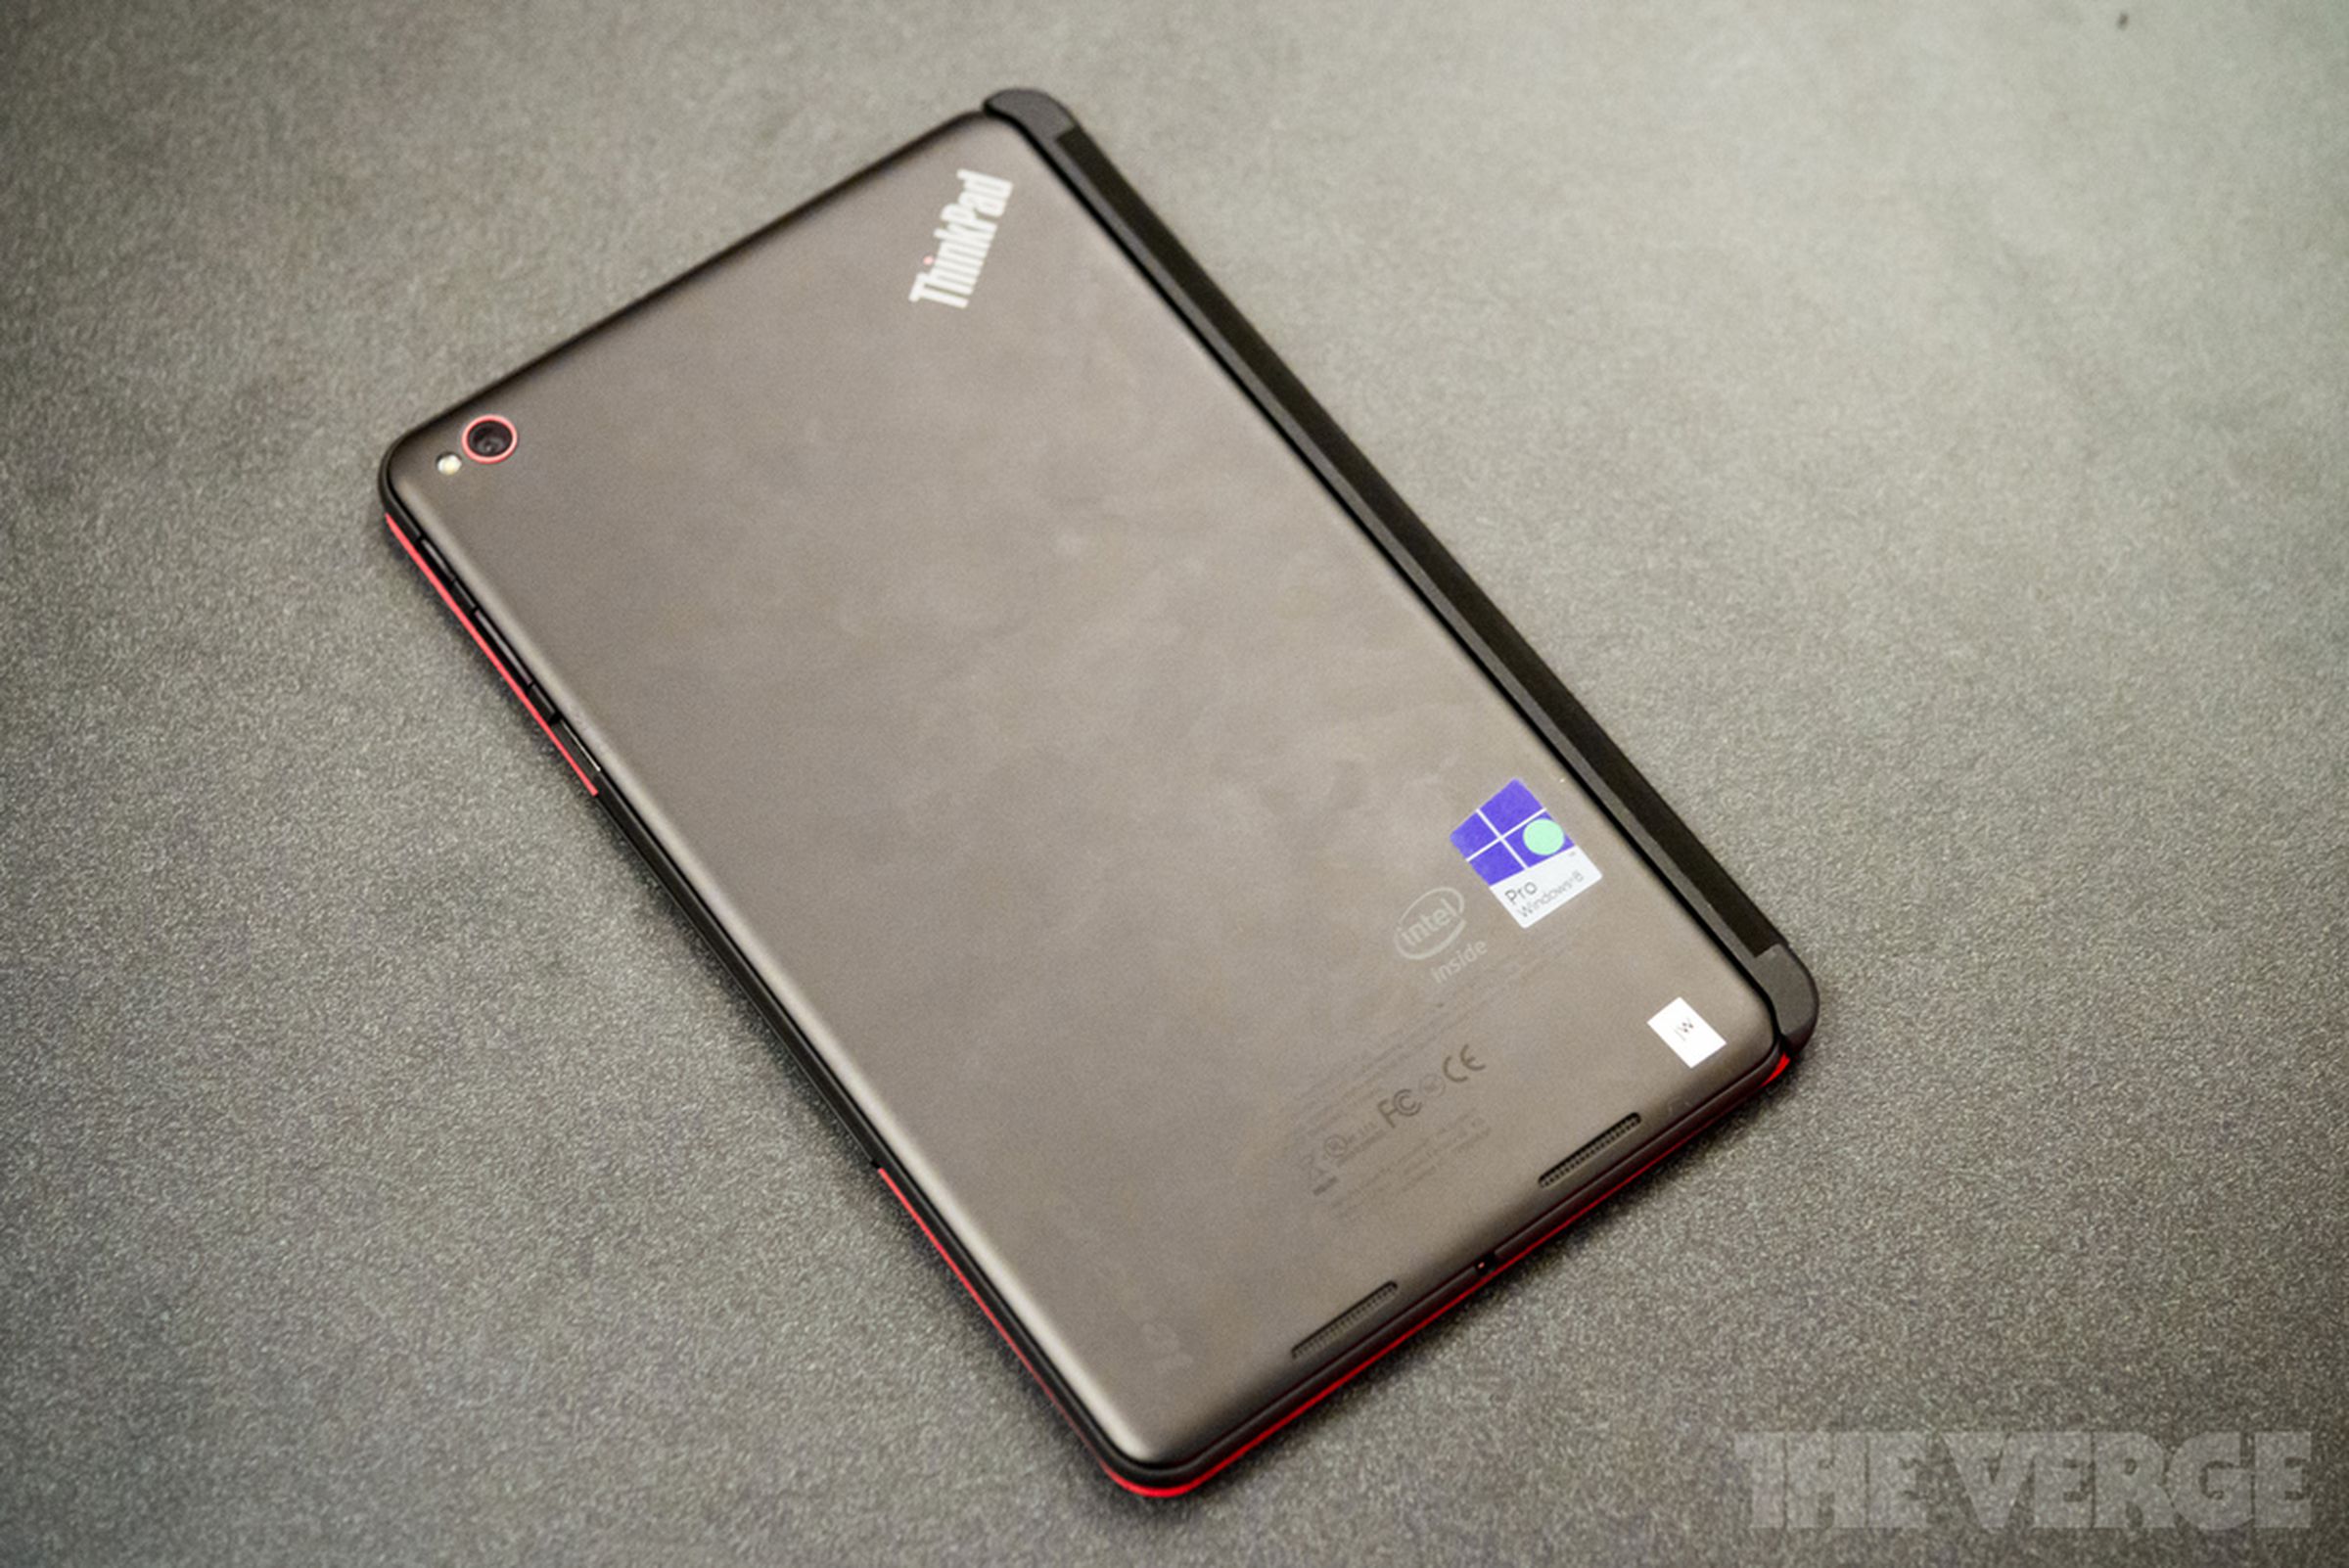 Lenovo ThinkPad 8 hands-on photos